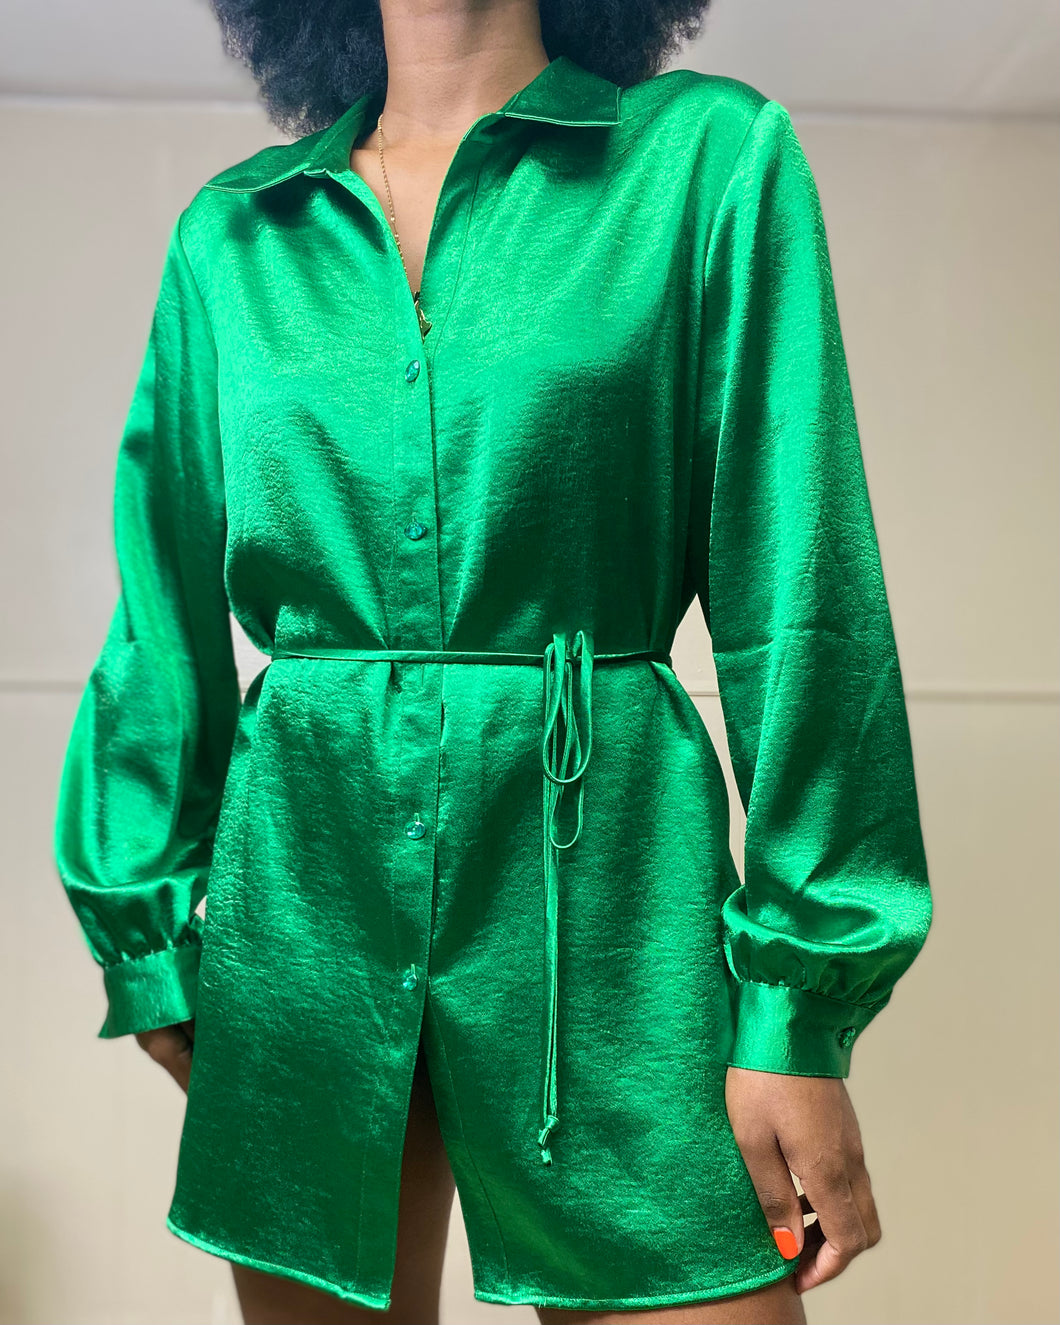 Green Long Sleeve Shimmery Satin Dress Shirt(L)